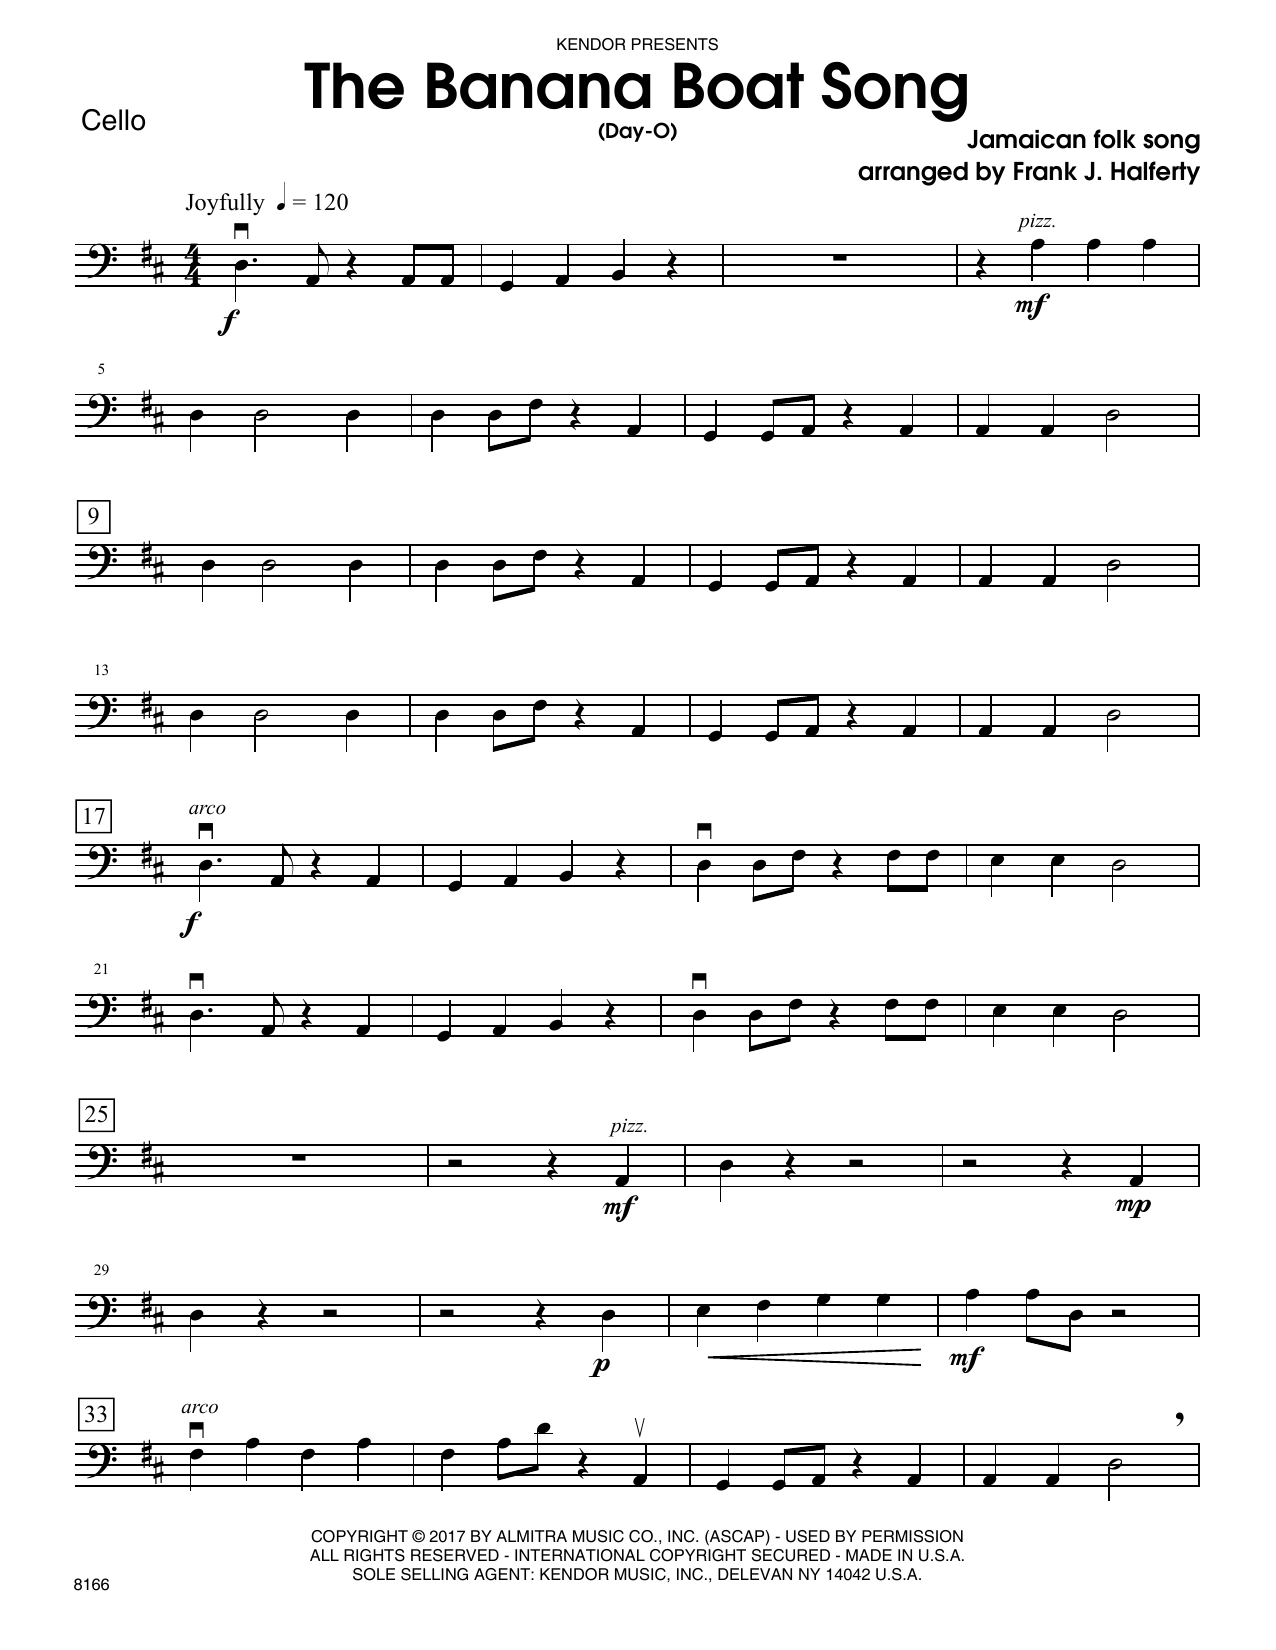 Frank J. Halferty Banana Boat Song, The (Day-O) - Cello sheet music notes printable PDF score